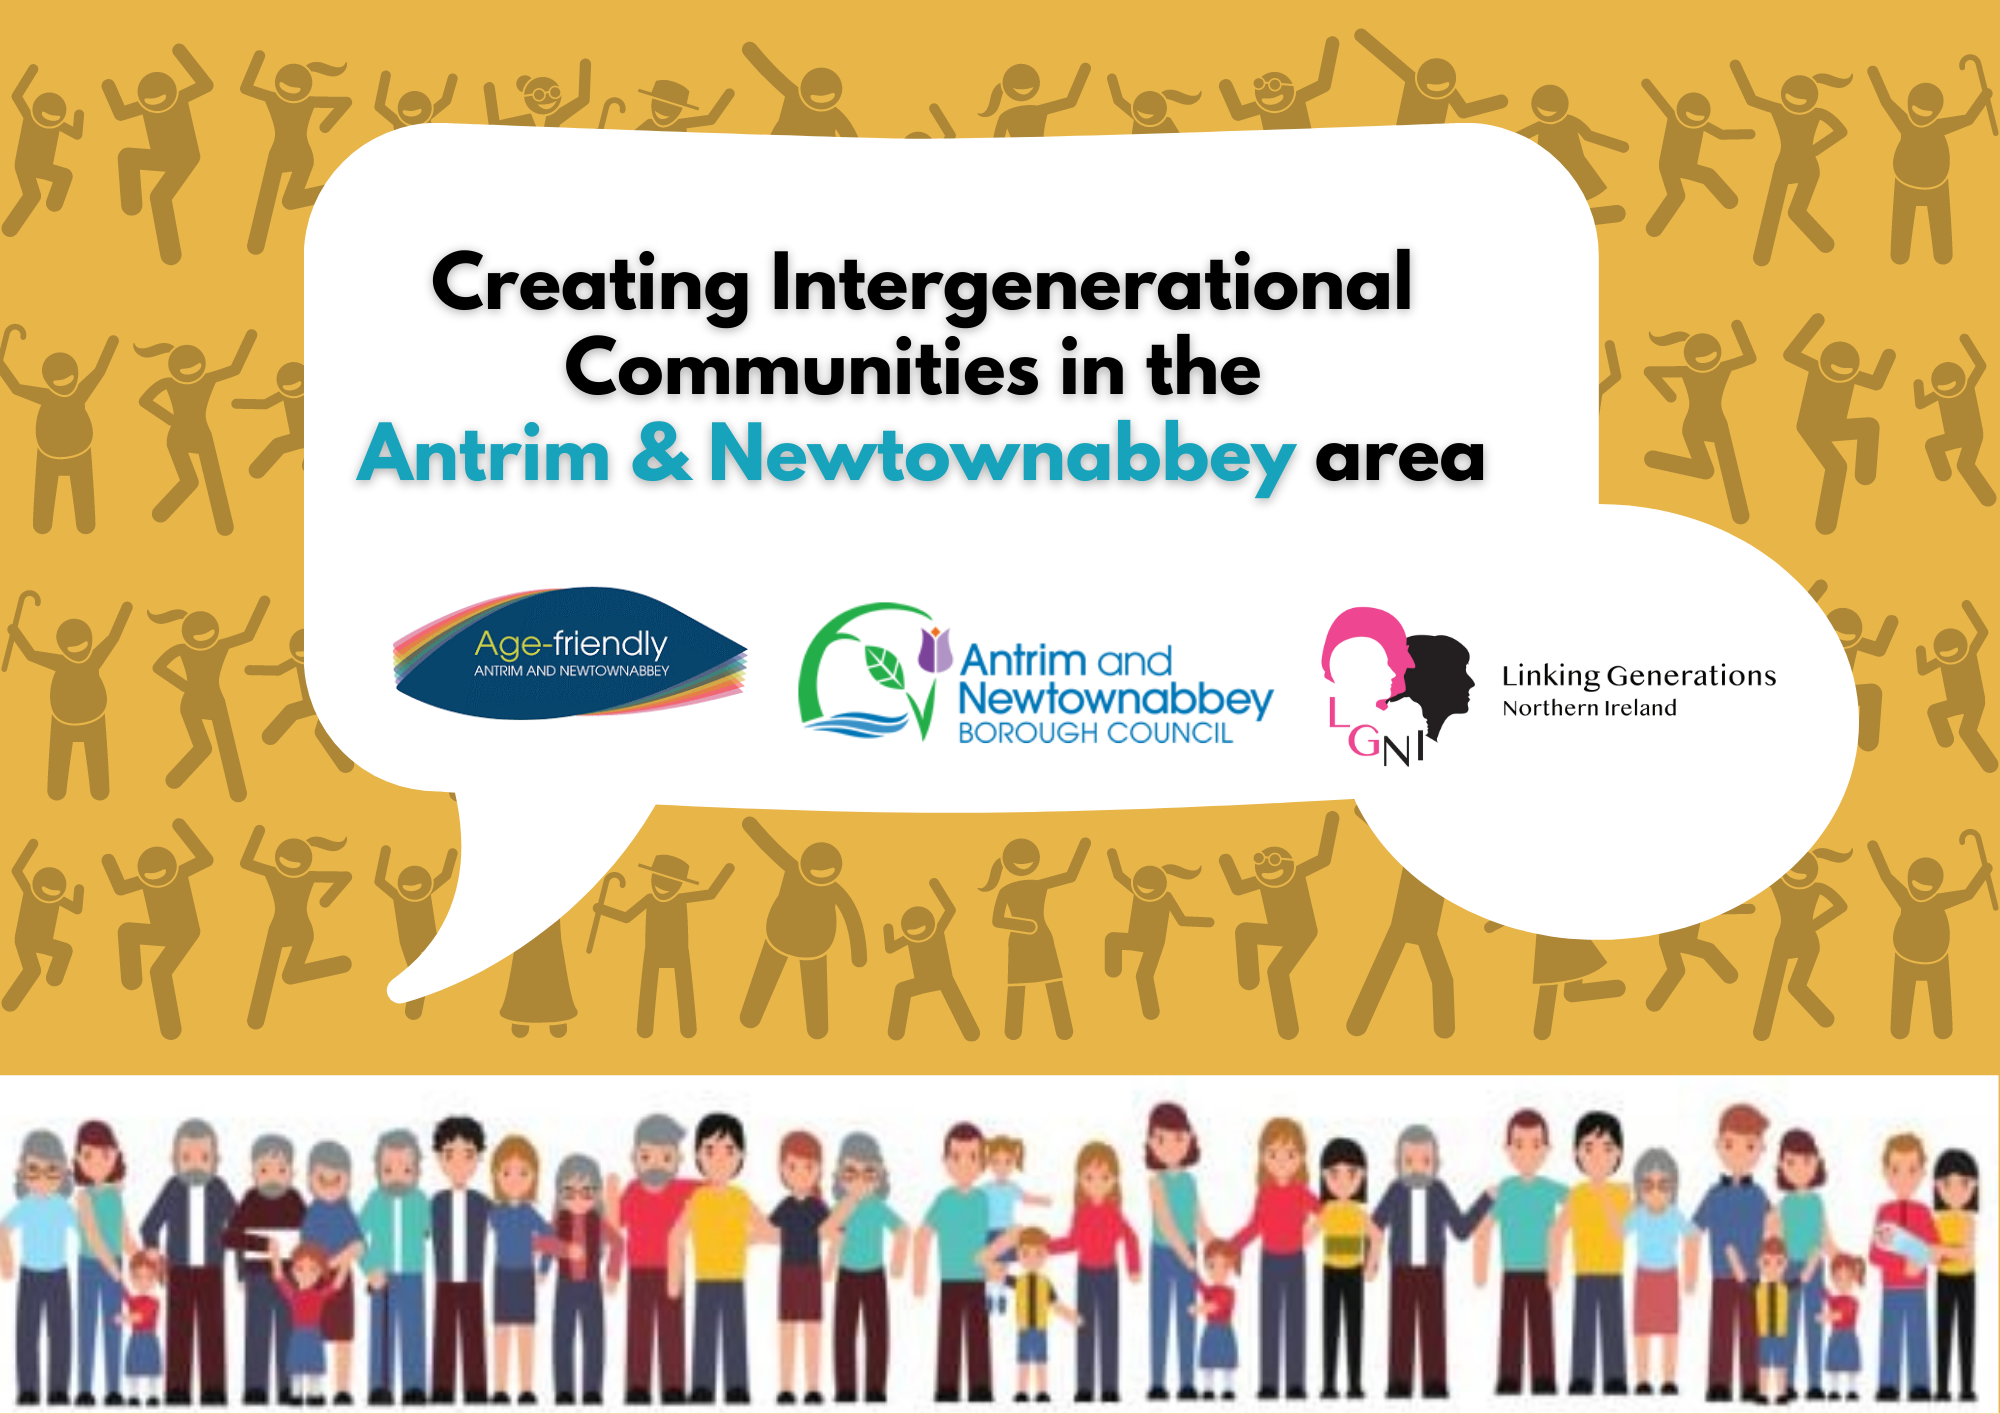 LGNI Antrim & Newtownabbey Network Meeting